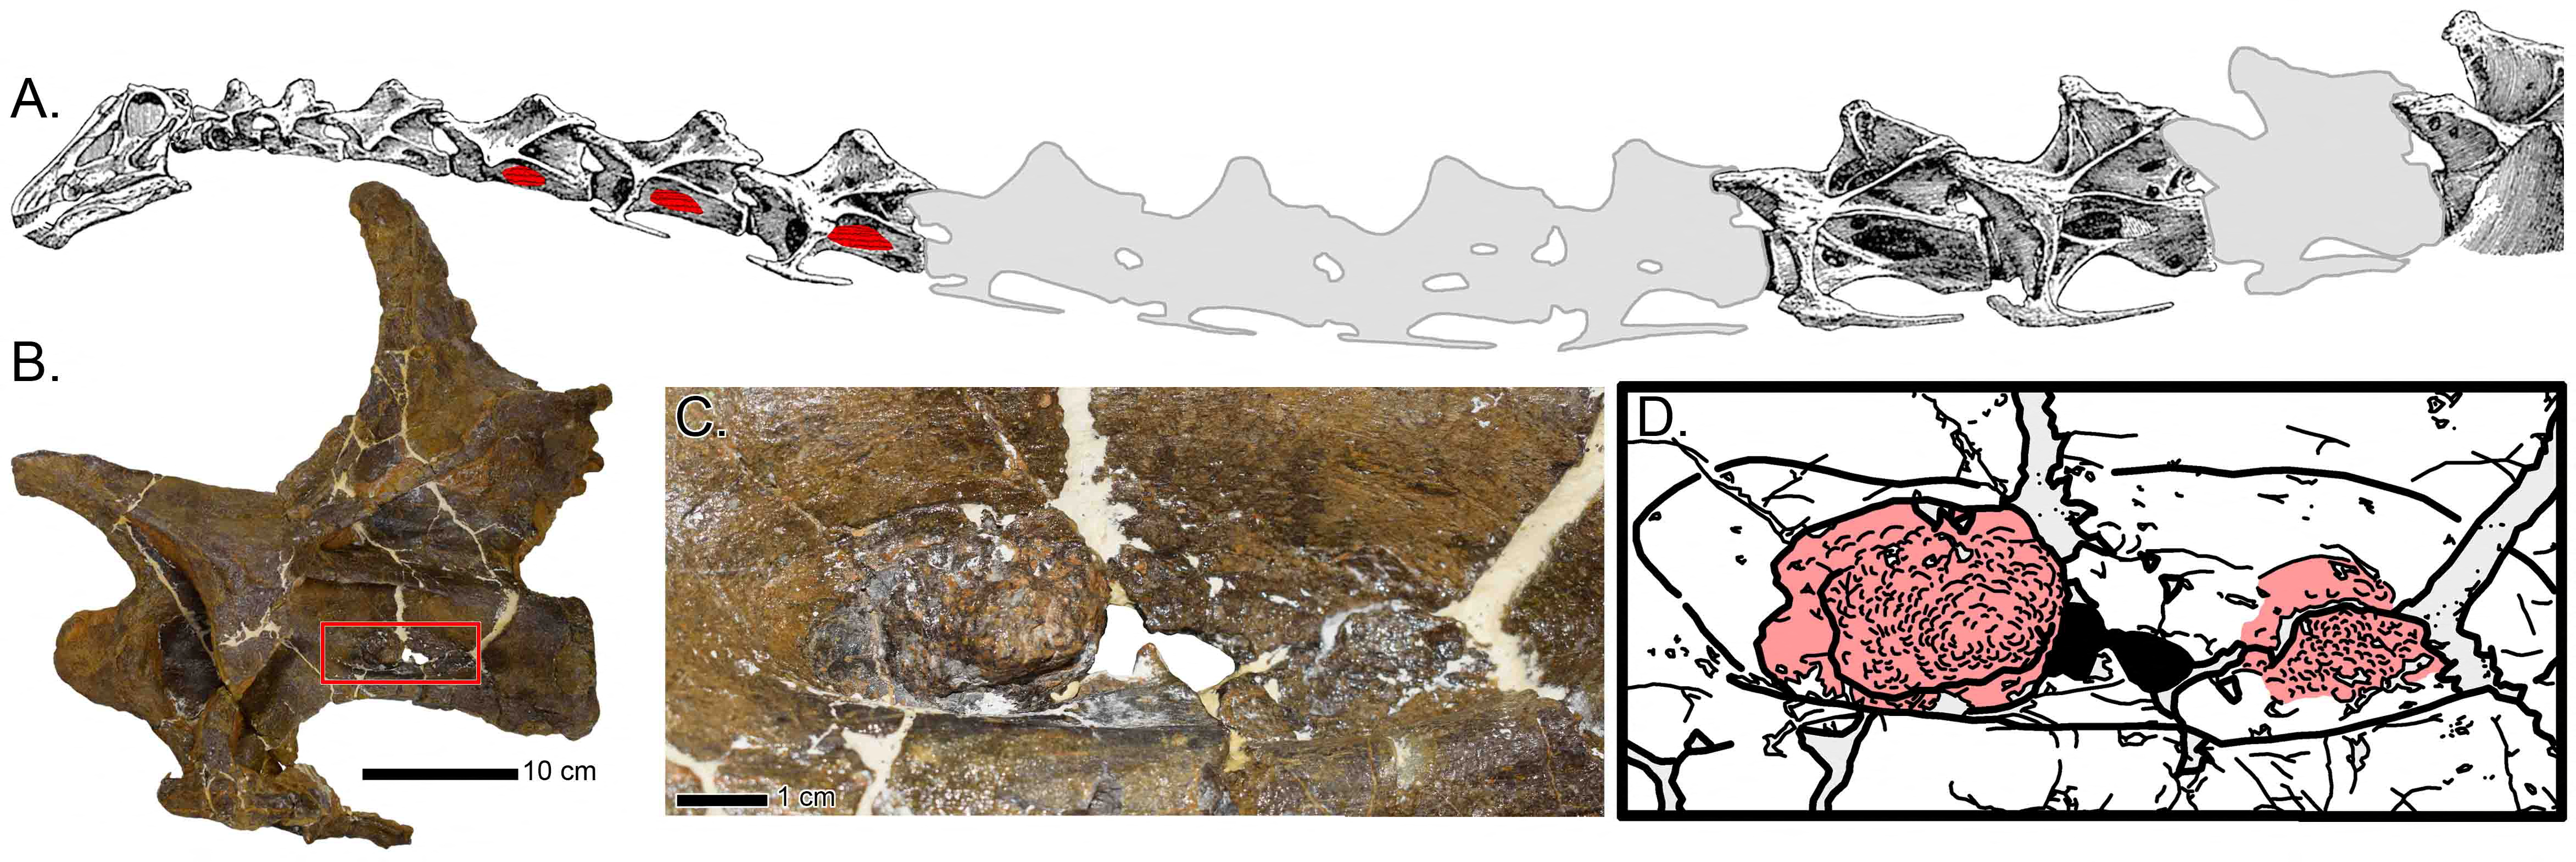 Abnormal bony growths shown in the fossilized vertebrae of a sauropod dinosaur